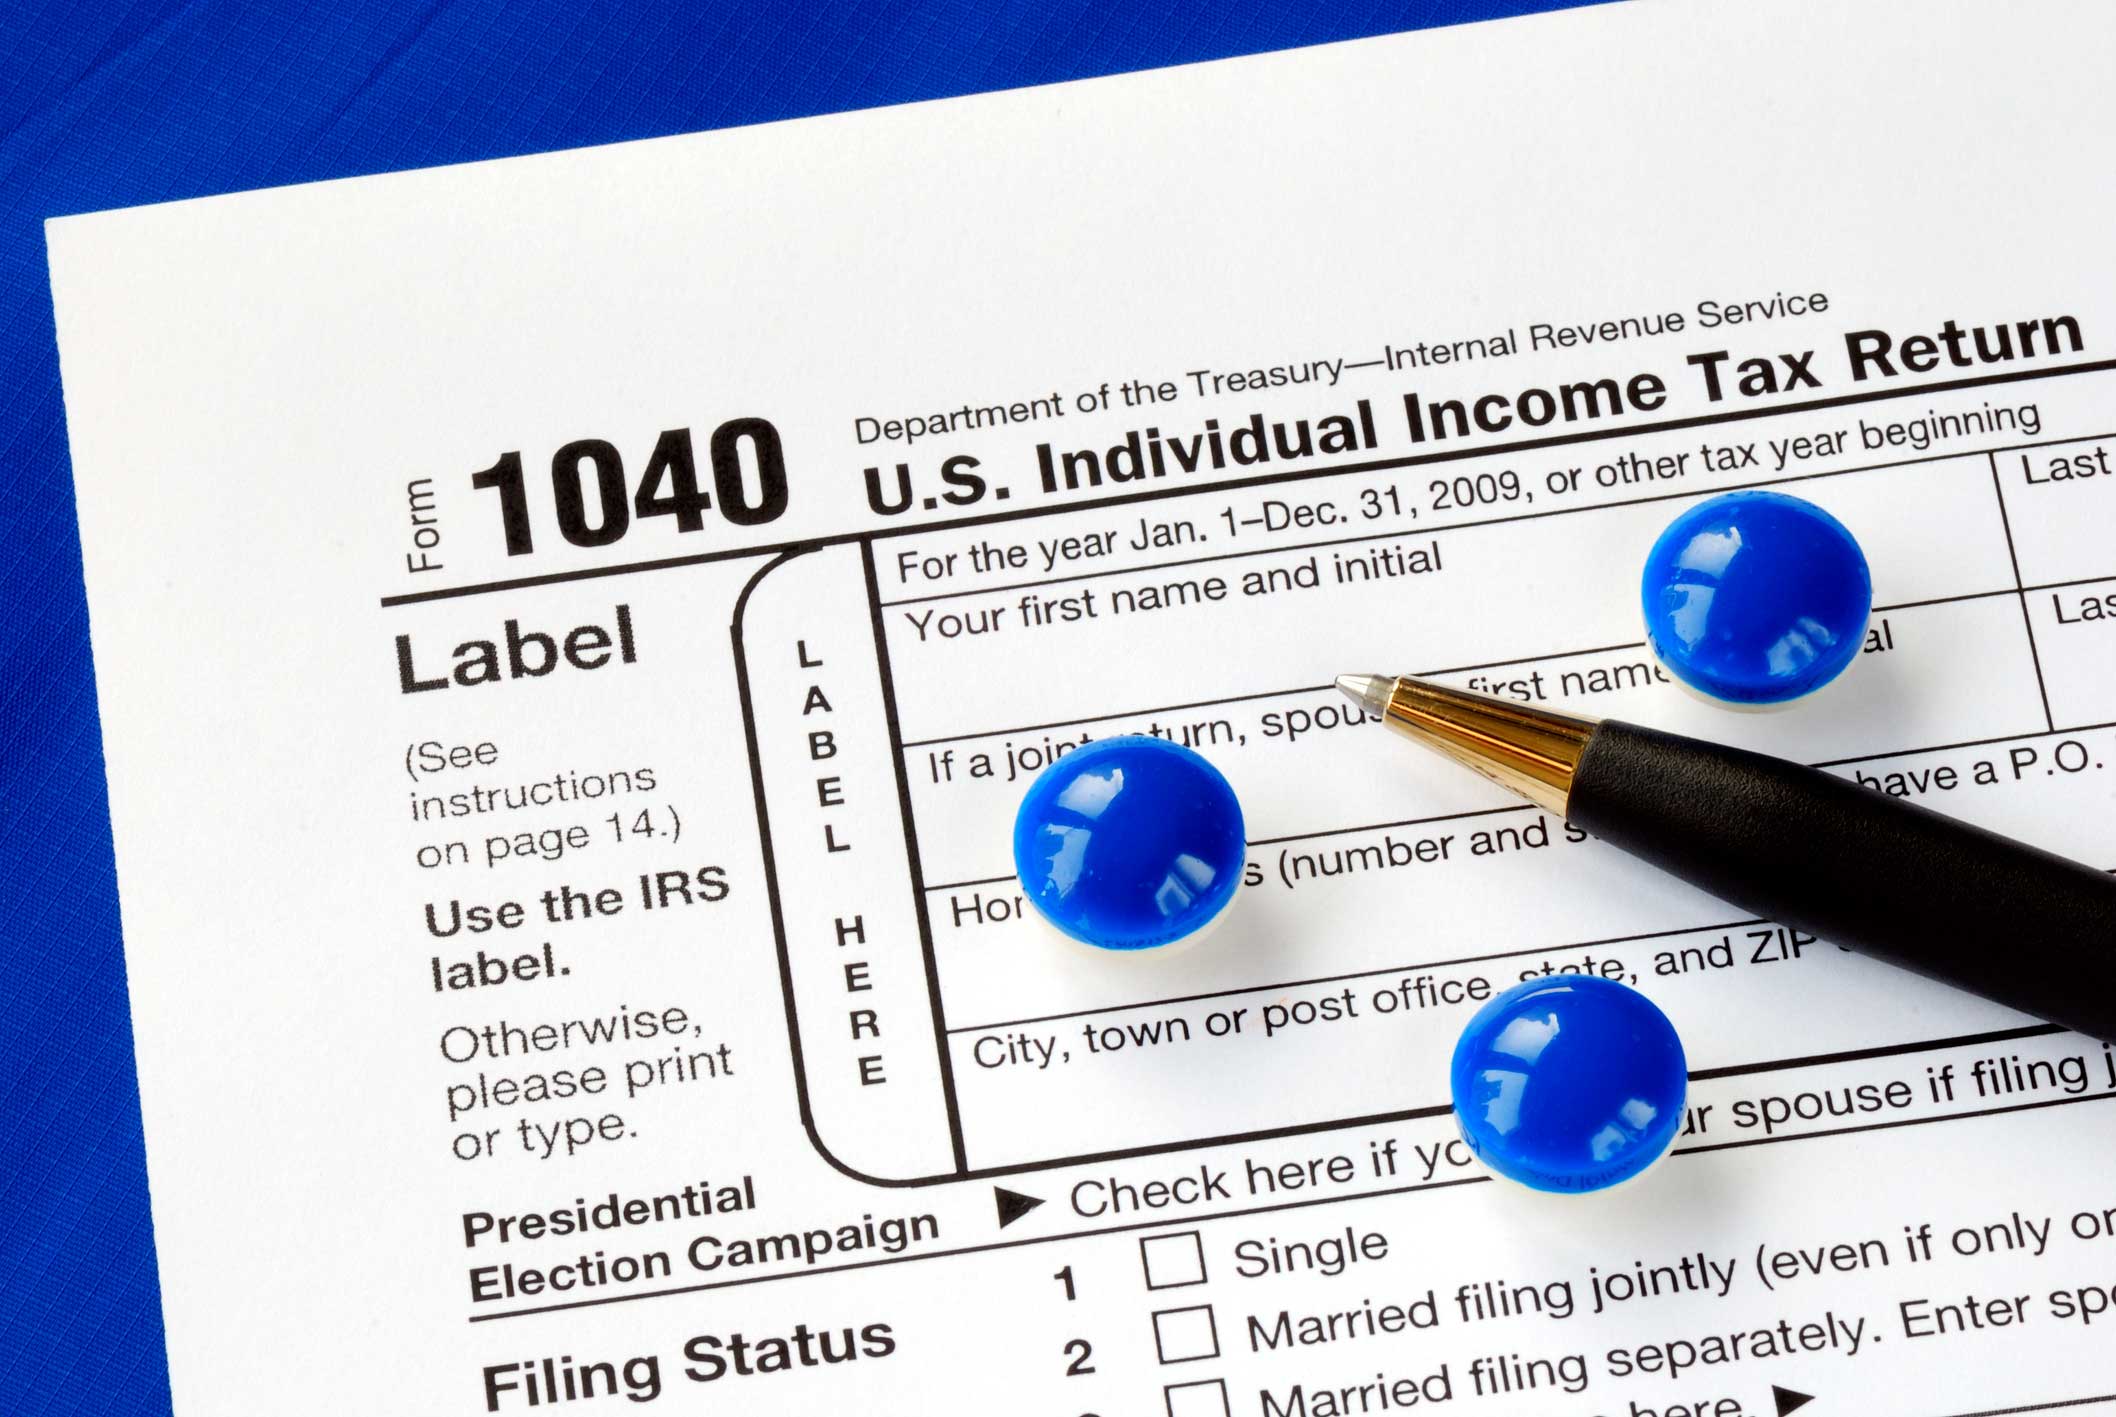 1040 Tax form illustration